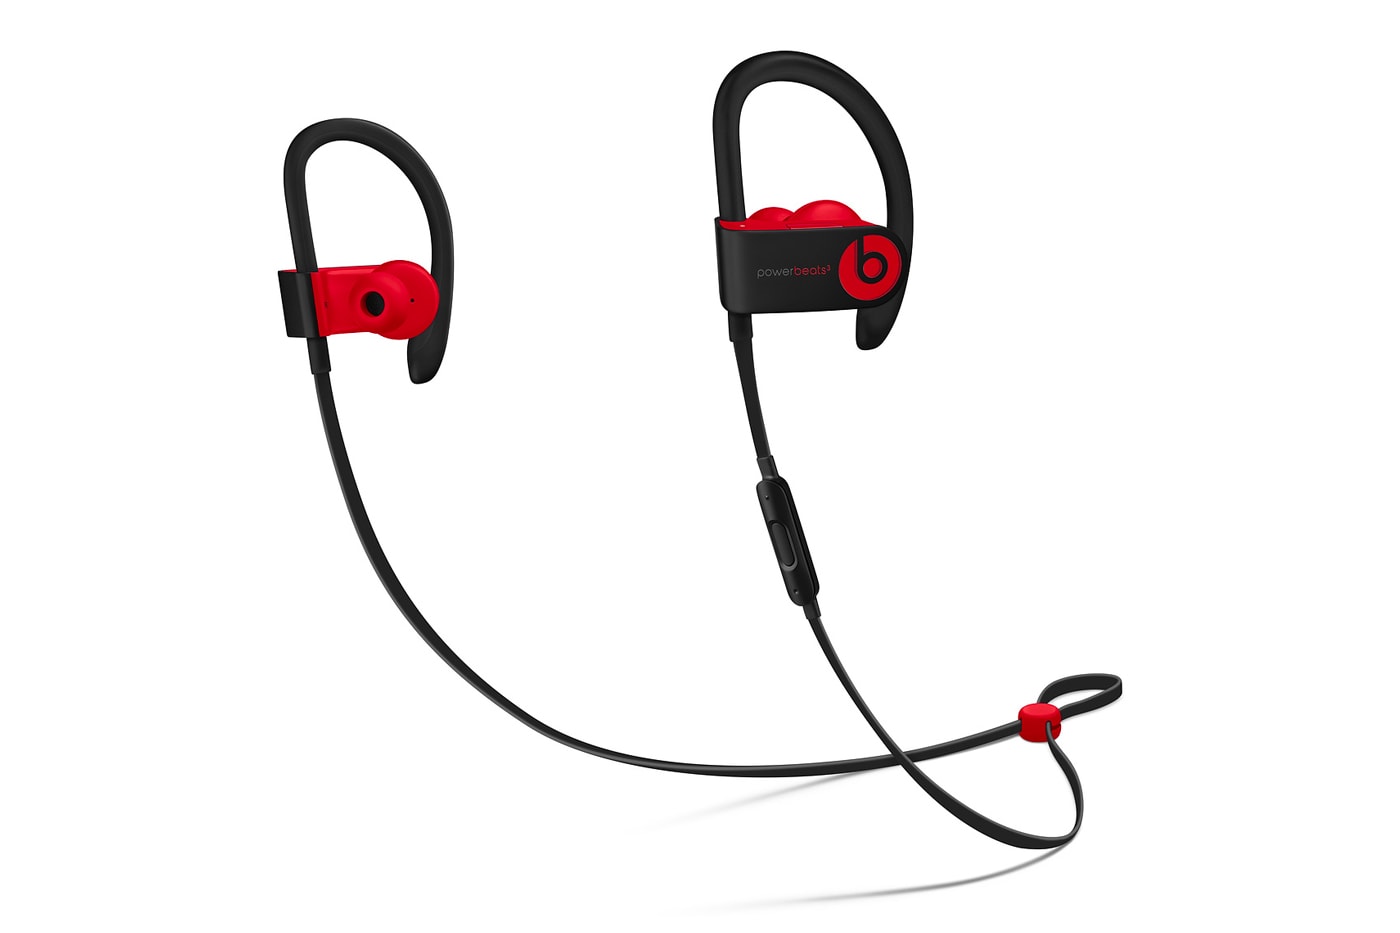 Beats by Dr Dre Cordless PowerBeats Release music earphones headphones sport wireless bluetooth